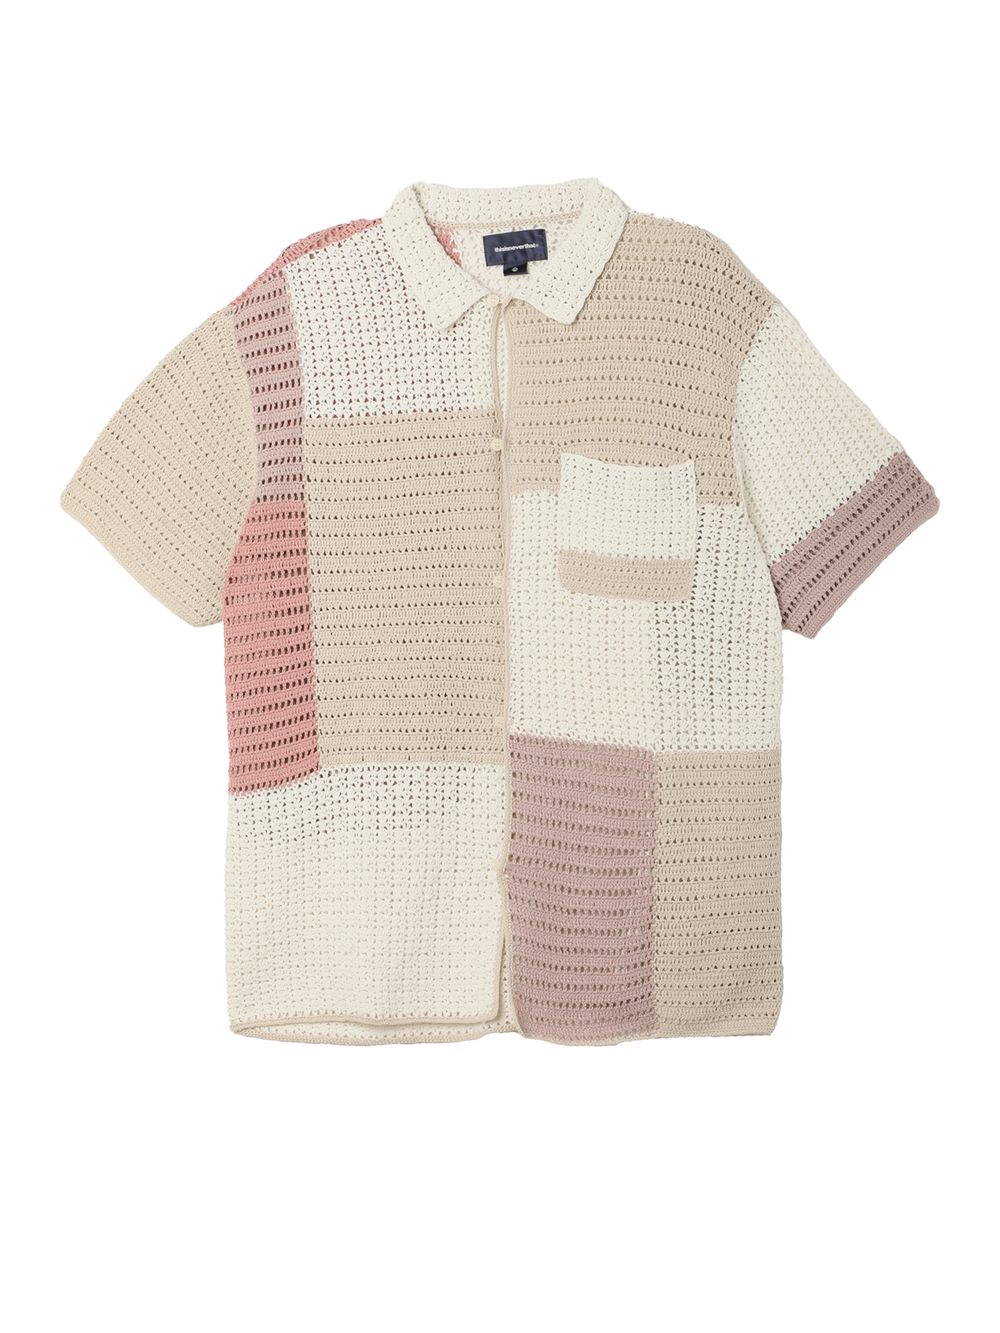 Мужская Рубашка Block Crochet